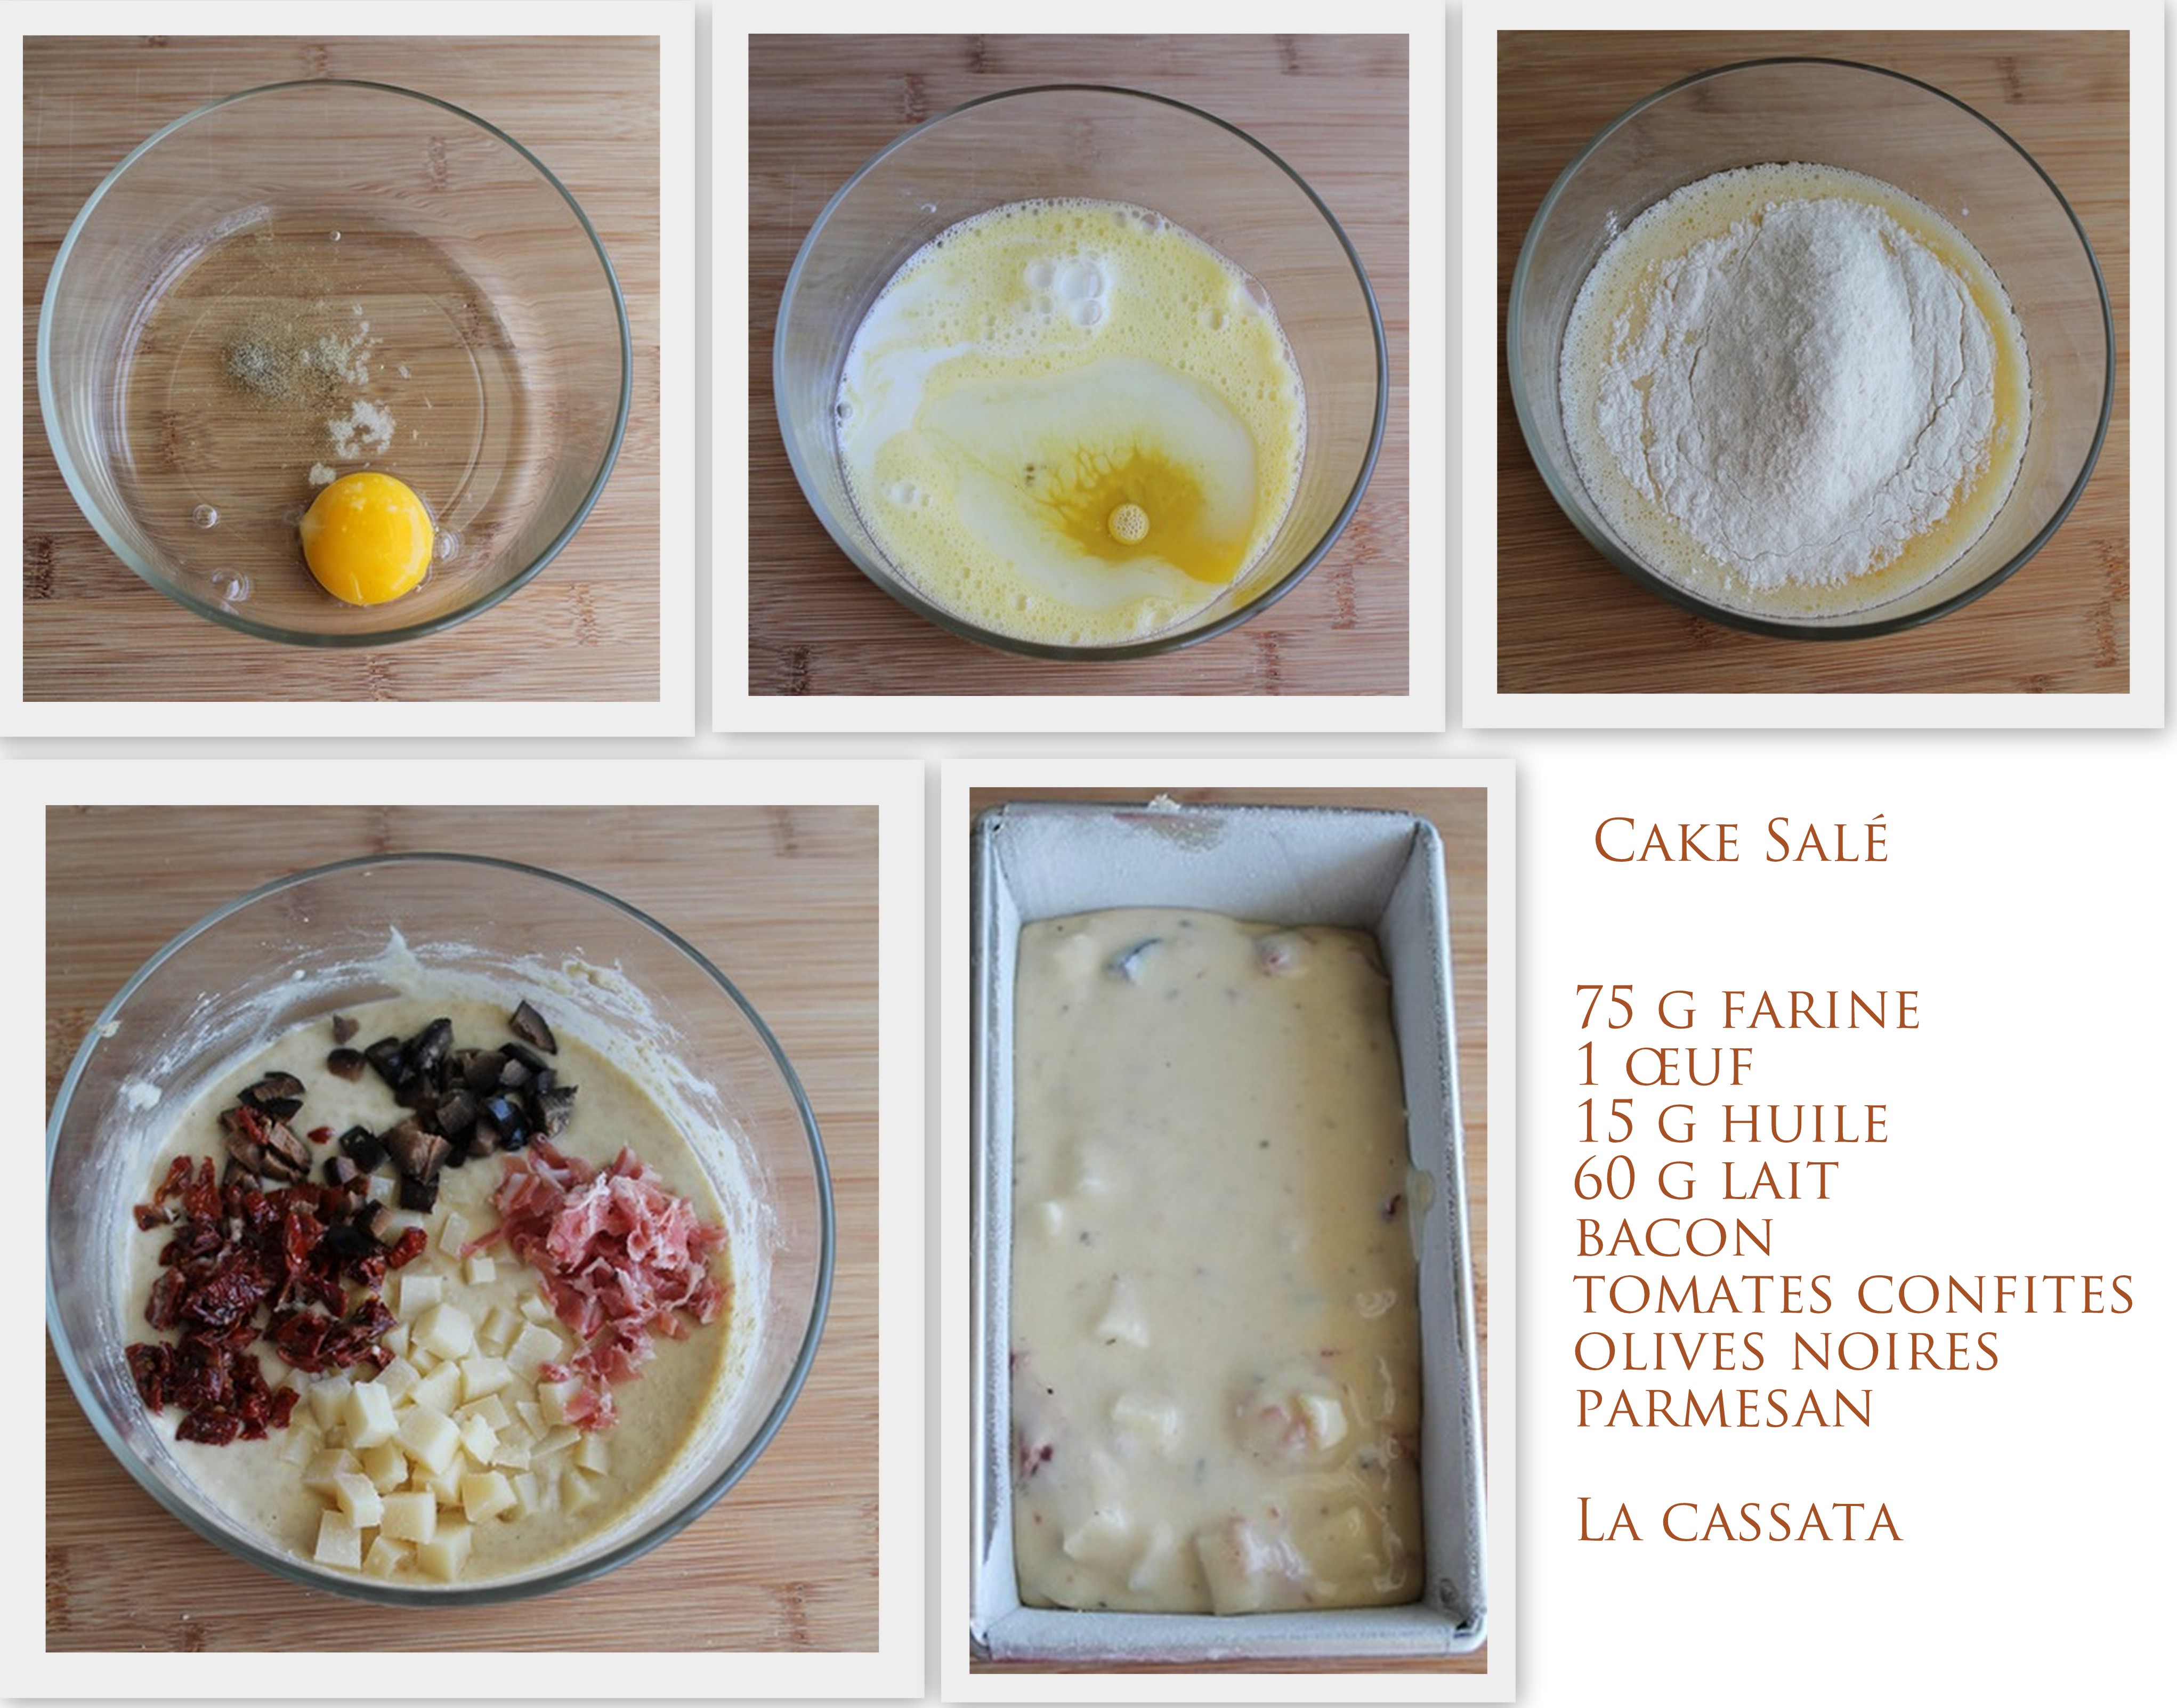 Cake salé sans gluten - La Cassata